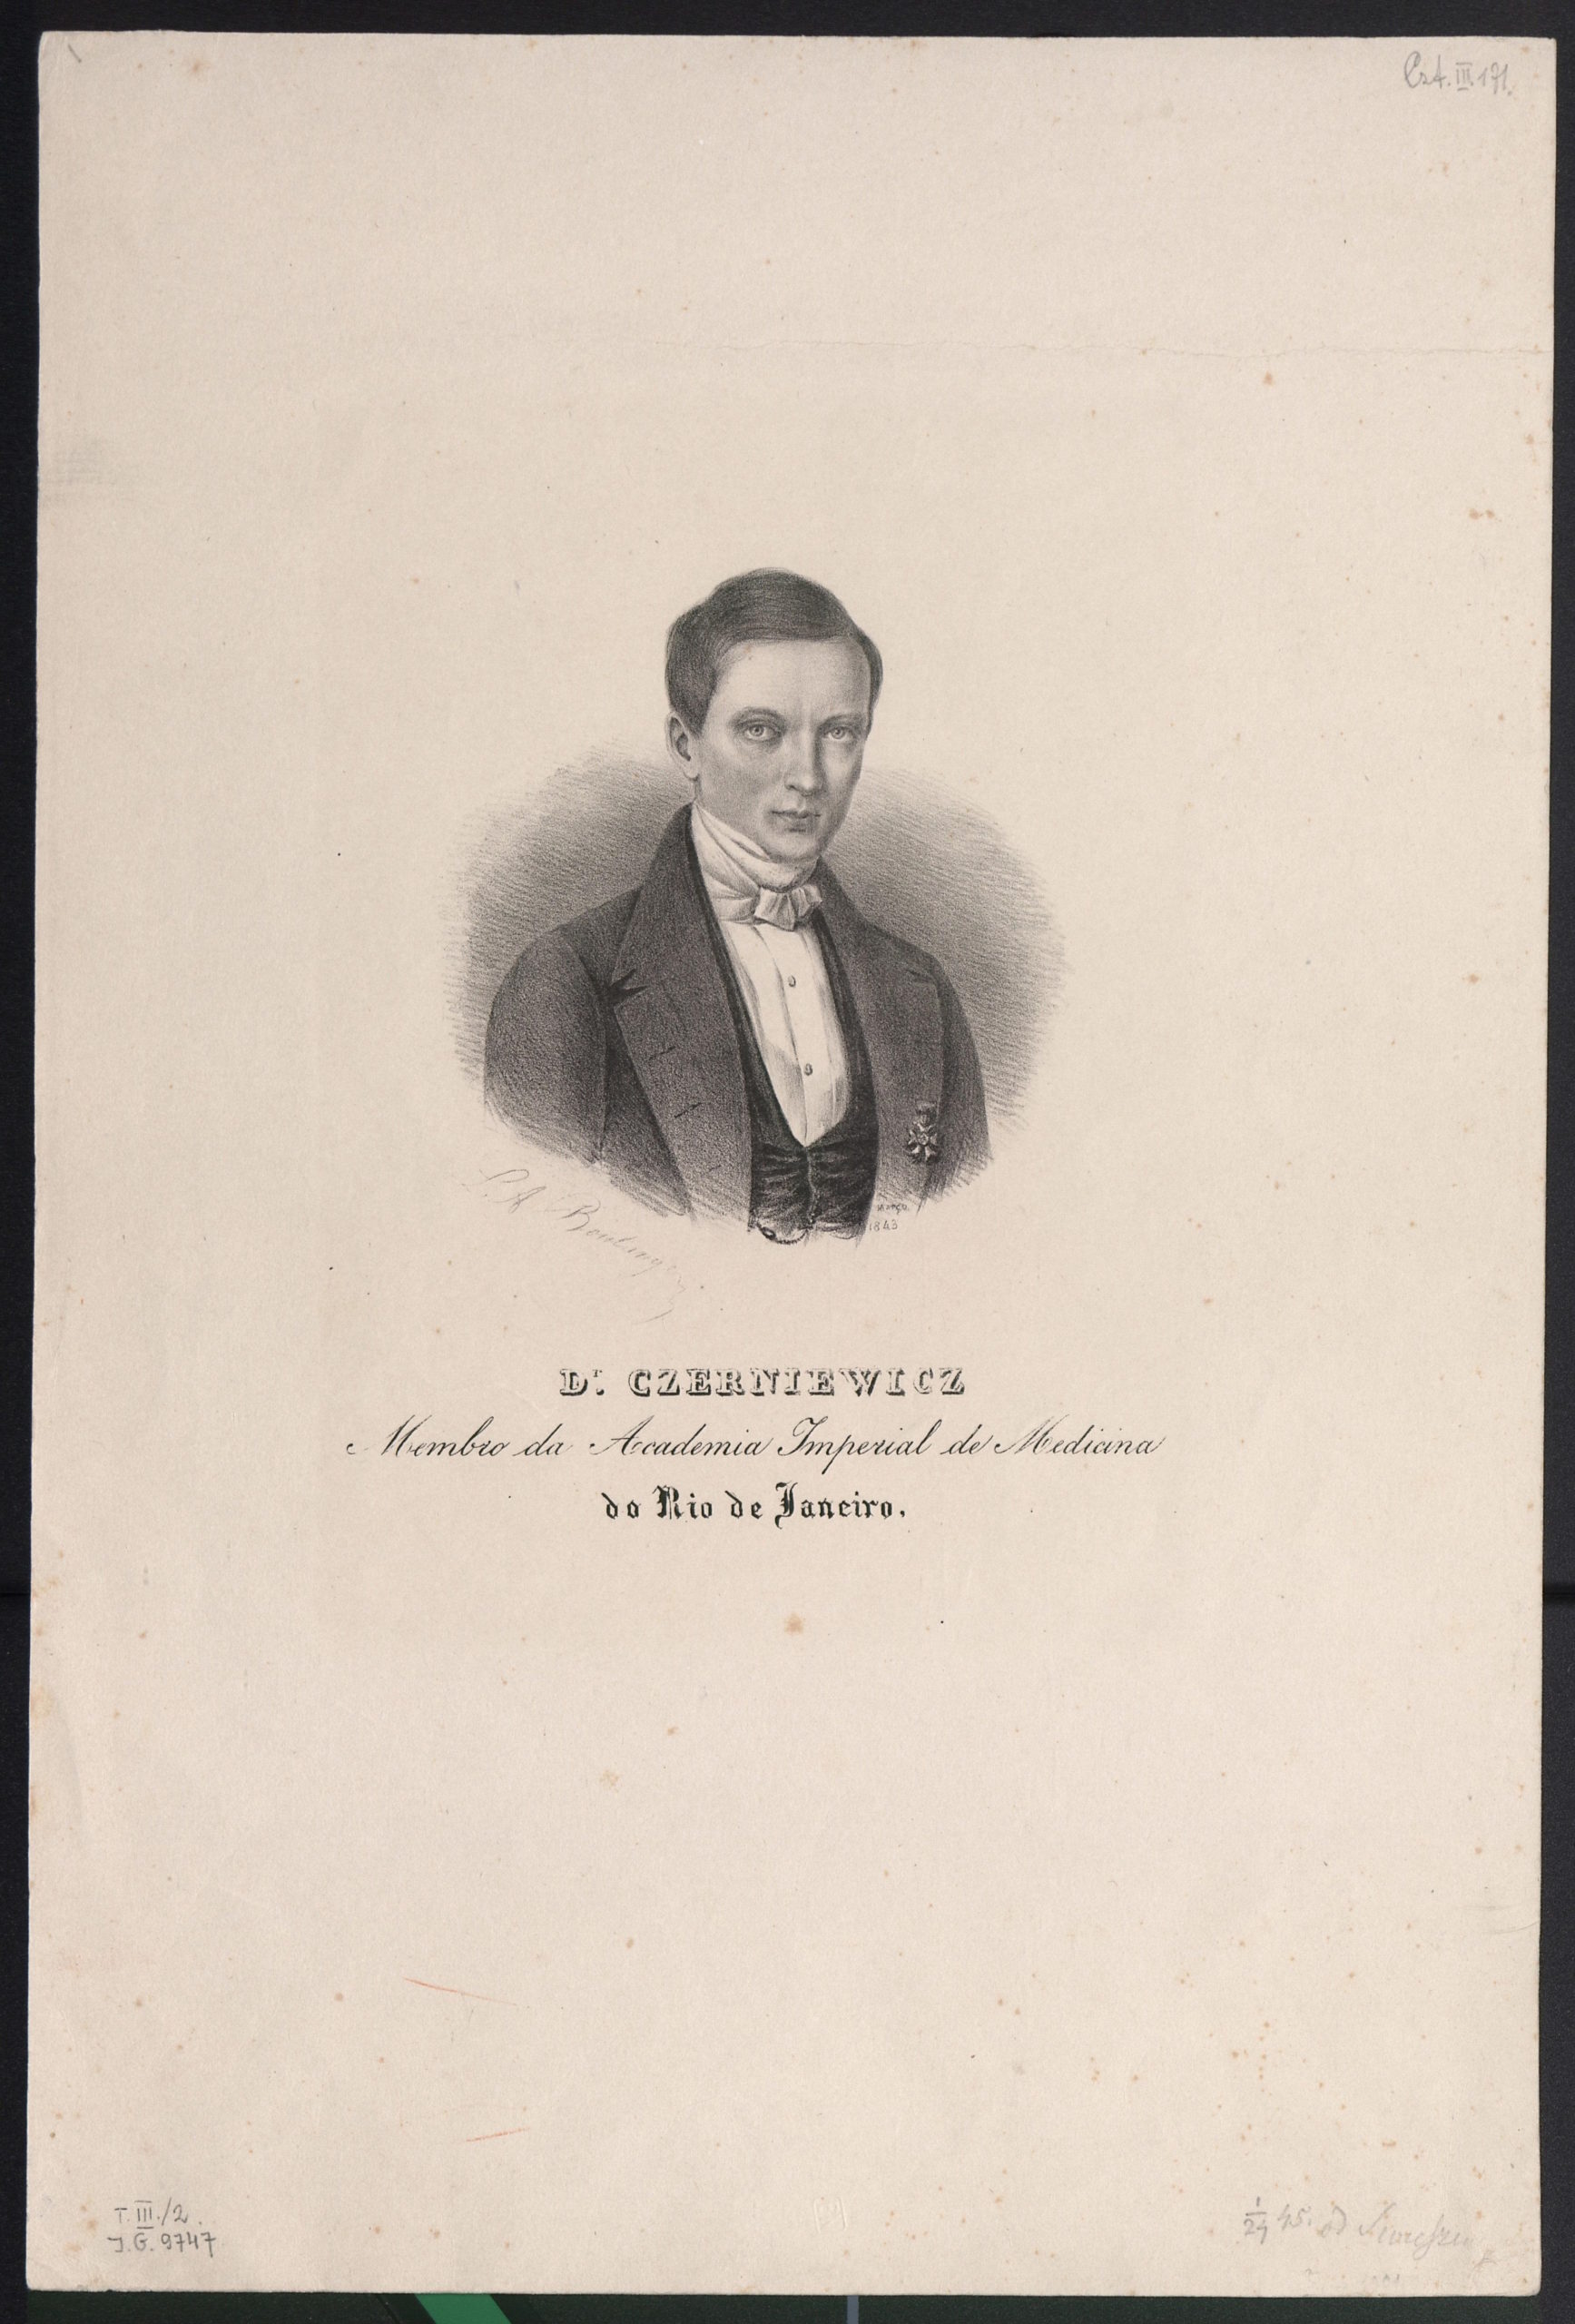 Doutor Piotr Czerniewicz, membro da Academia Imperial de Medicina do Rio de Janeiro). Gravura de 1843. Fonte: Polona